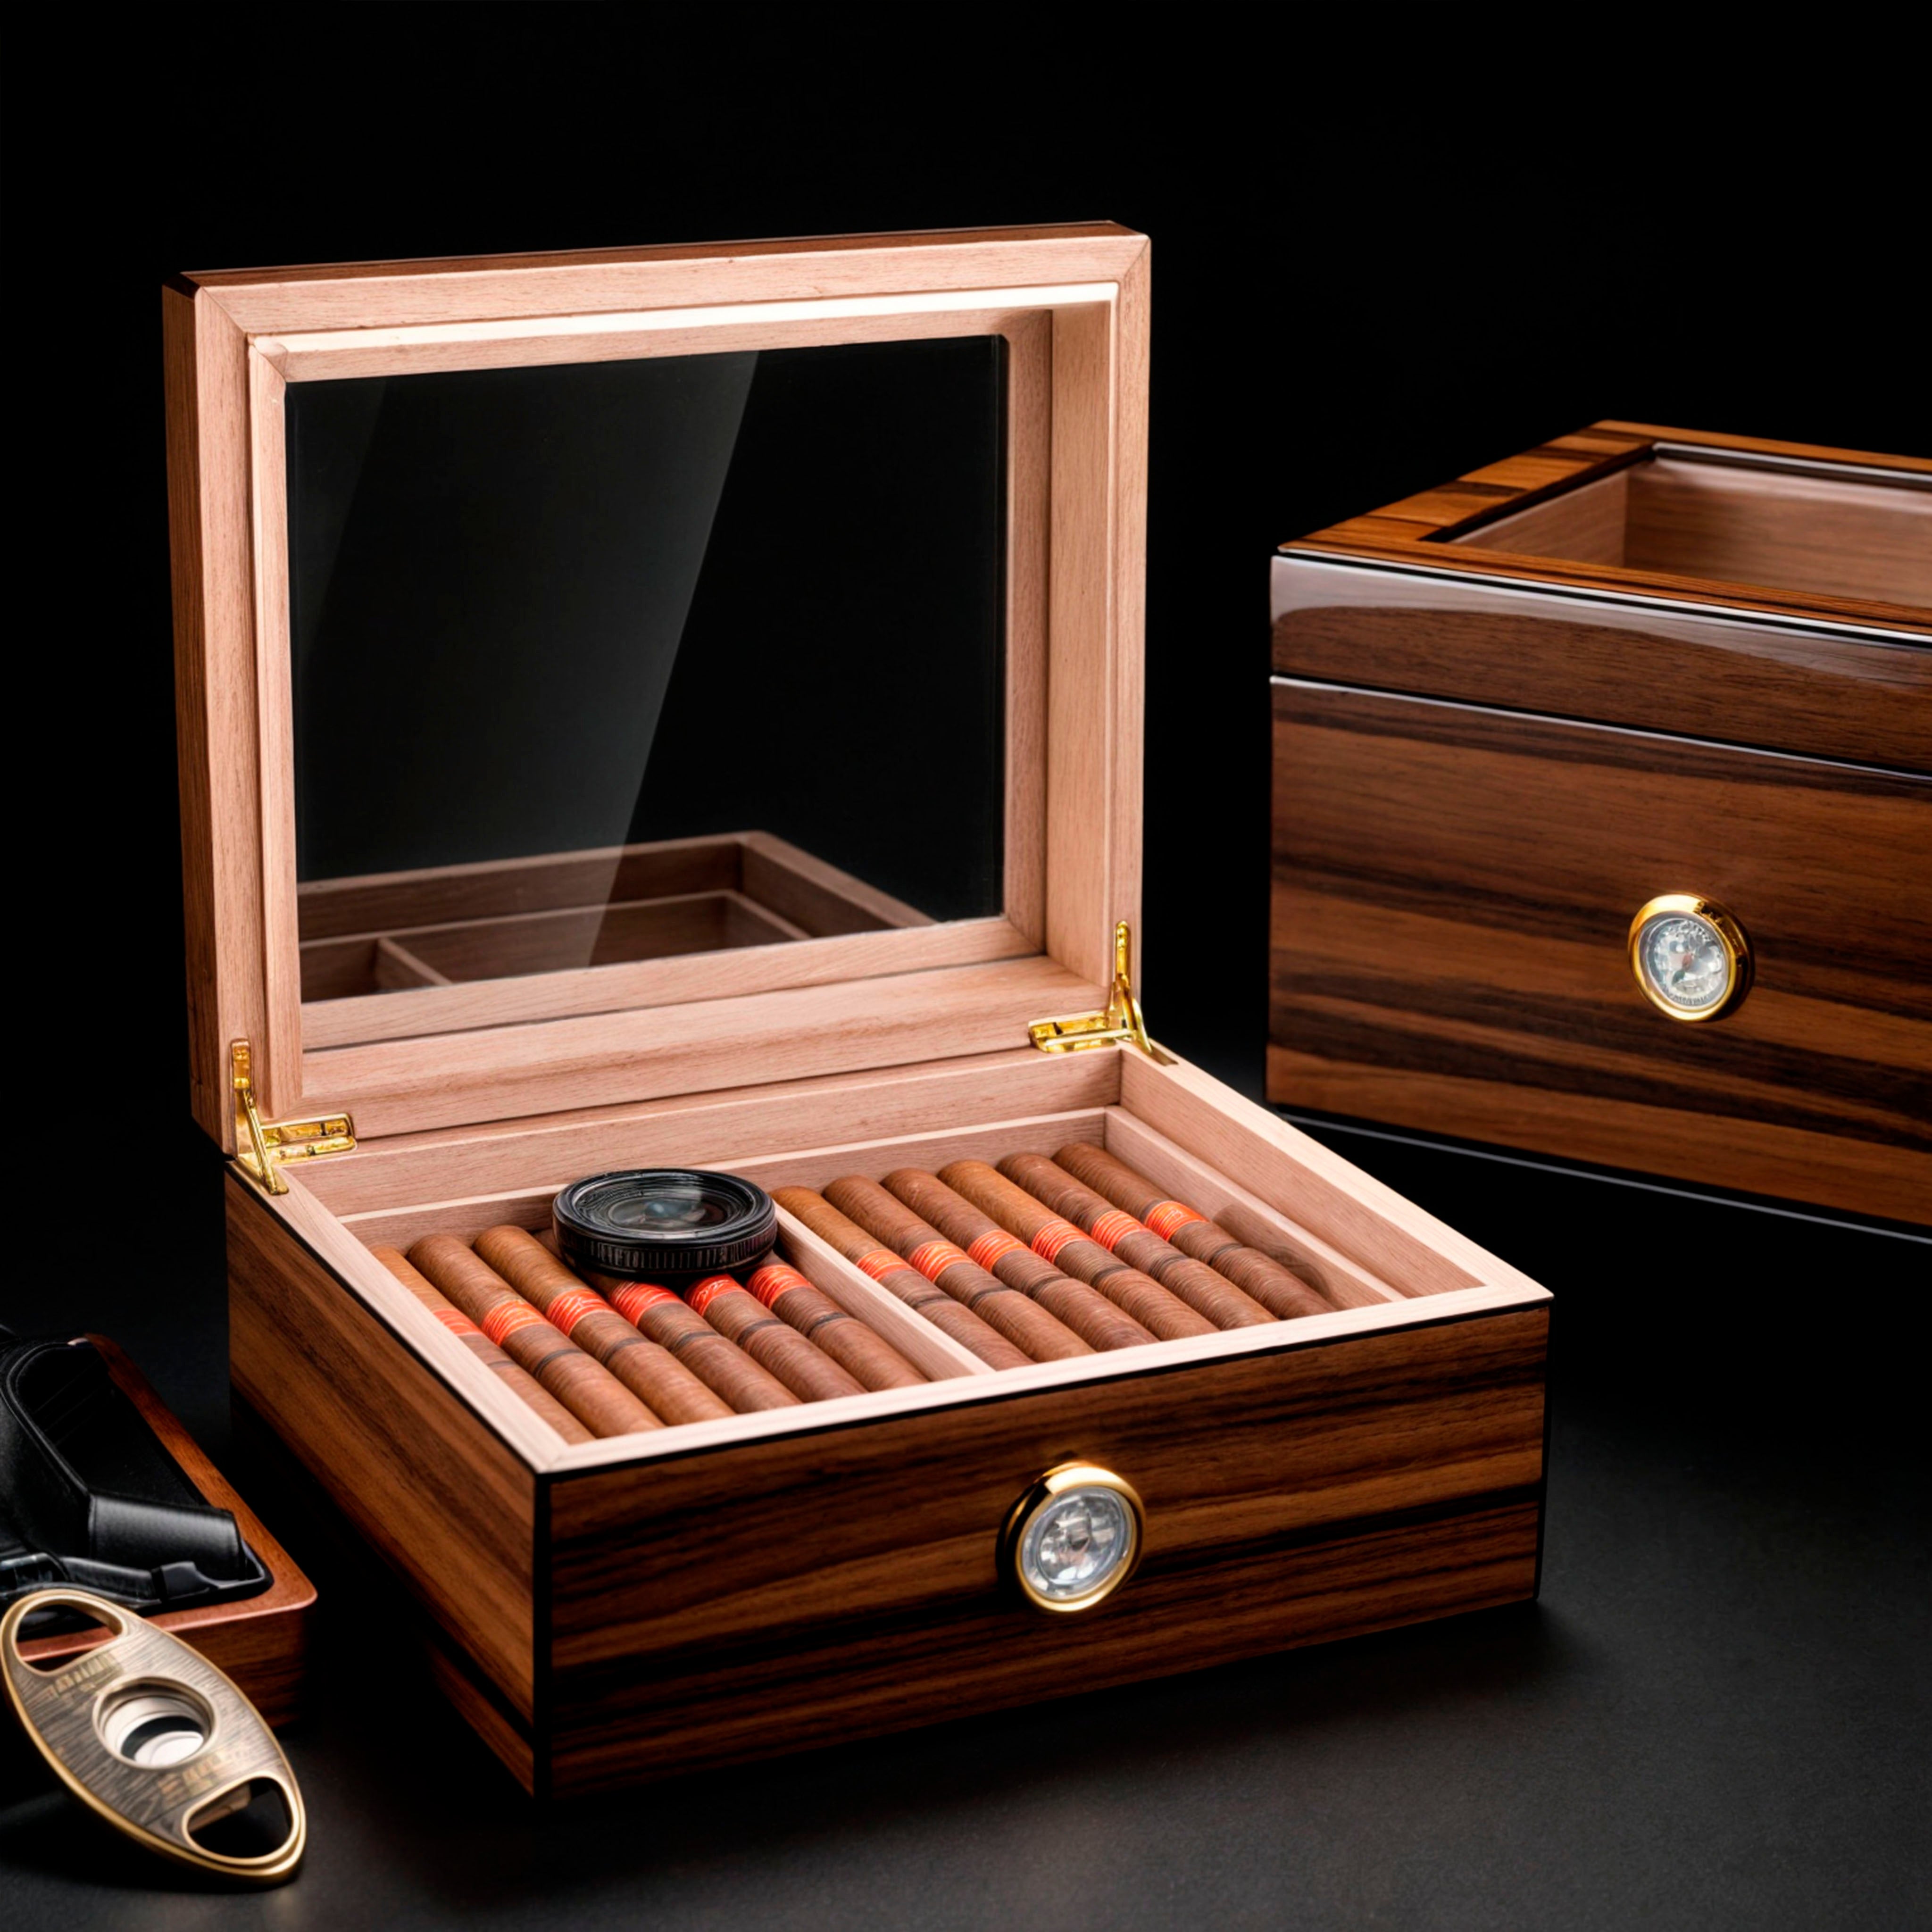 The Cigars Box